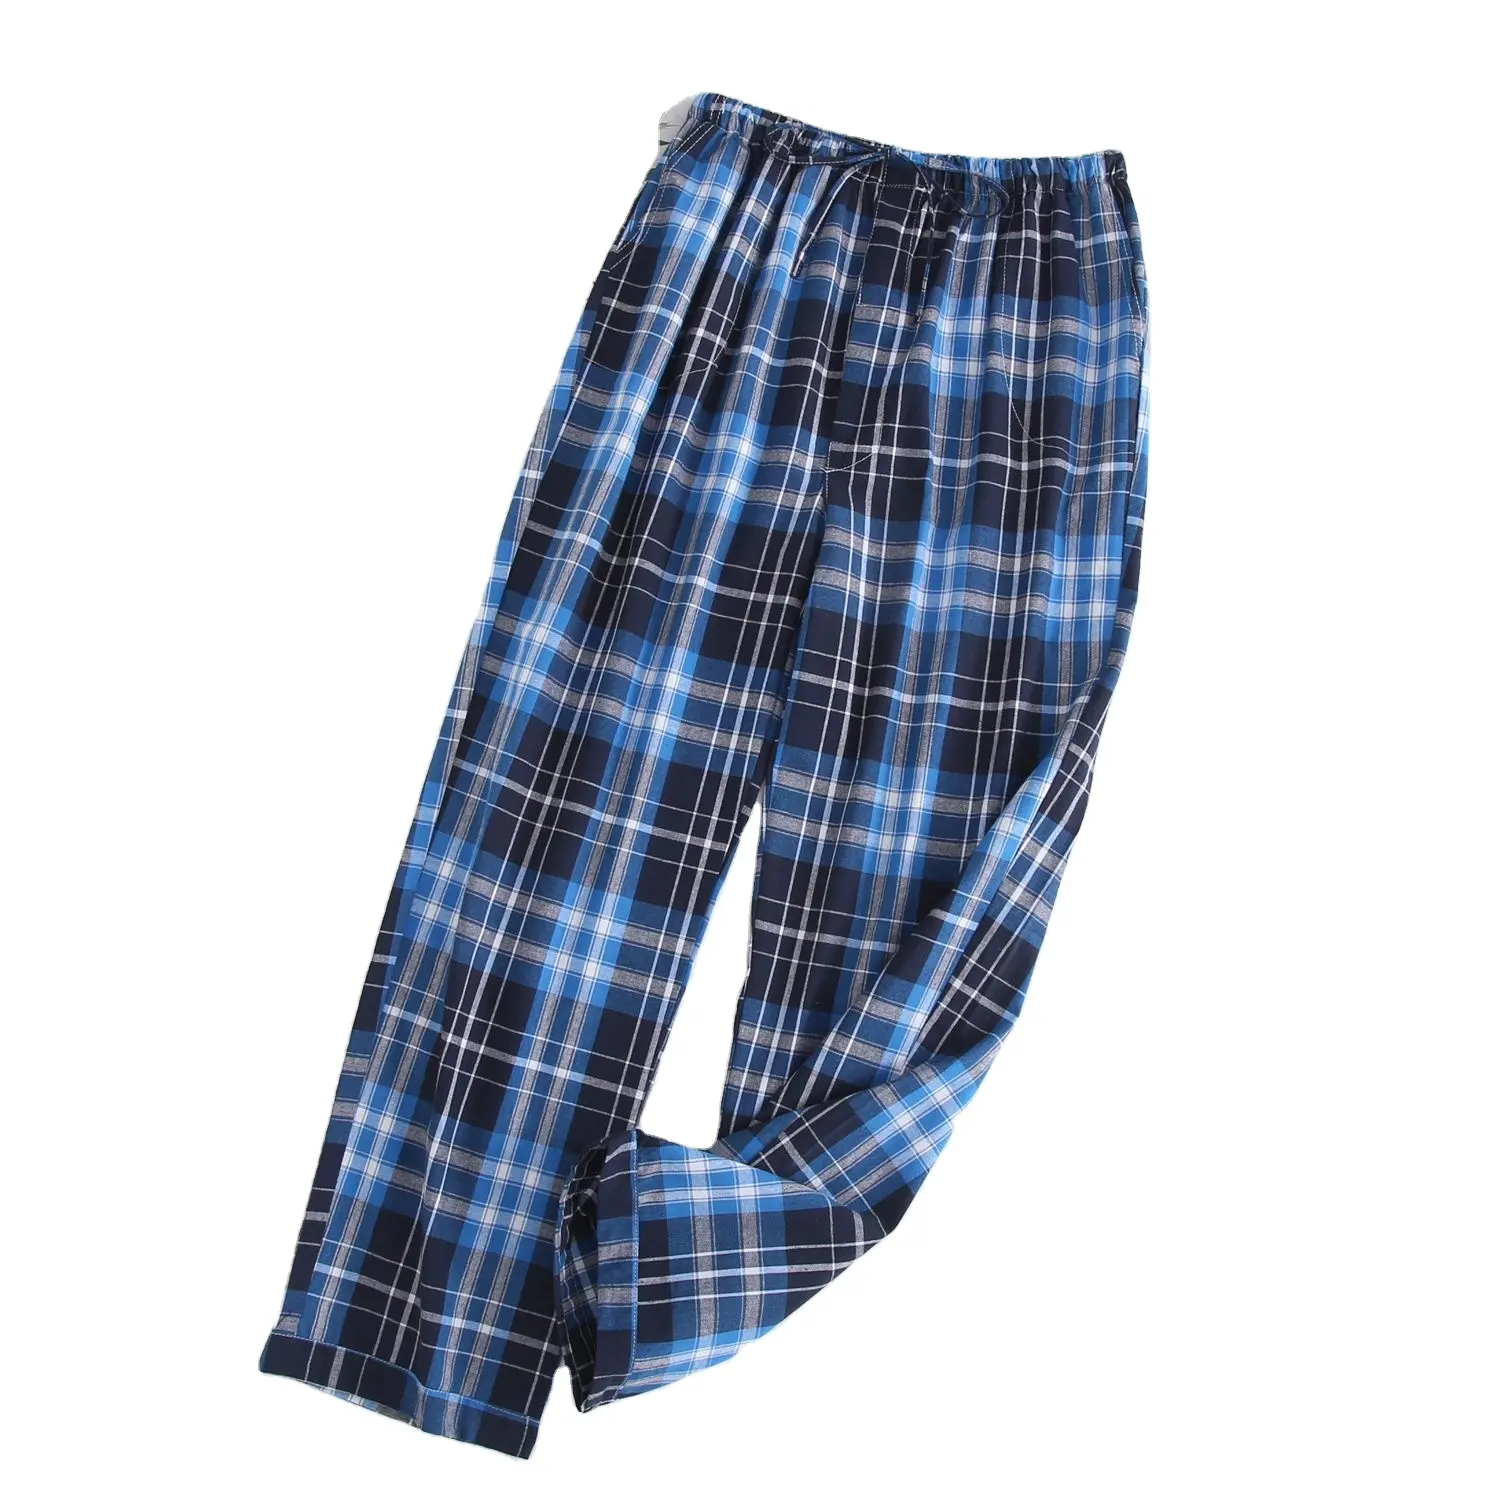 Men's Cotton Plaid Printing Pajama Pants Straight Fit Woven Sleep Bottoms Fashion Style